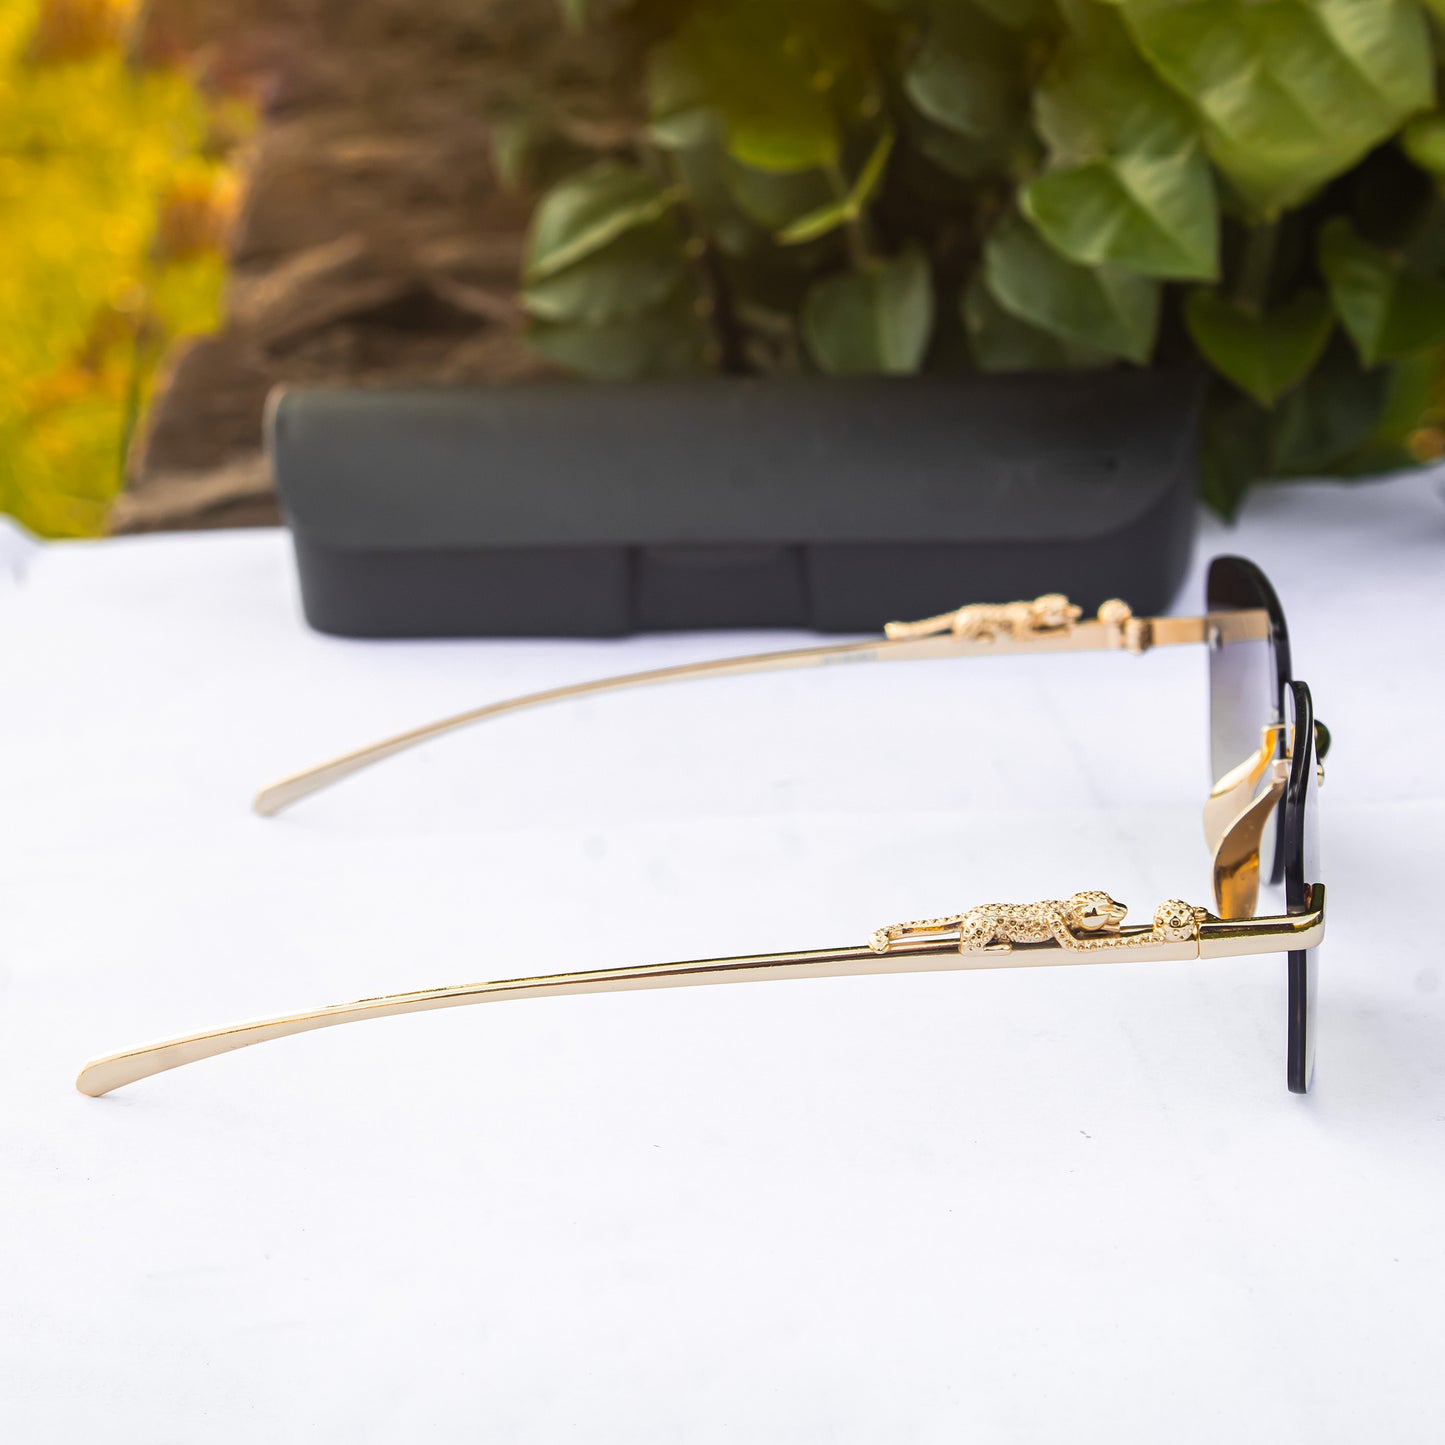 Jiebo Designer Rimless Vintage Shades Sunglasses For Unisex